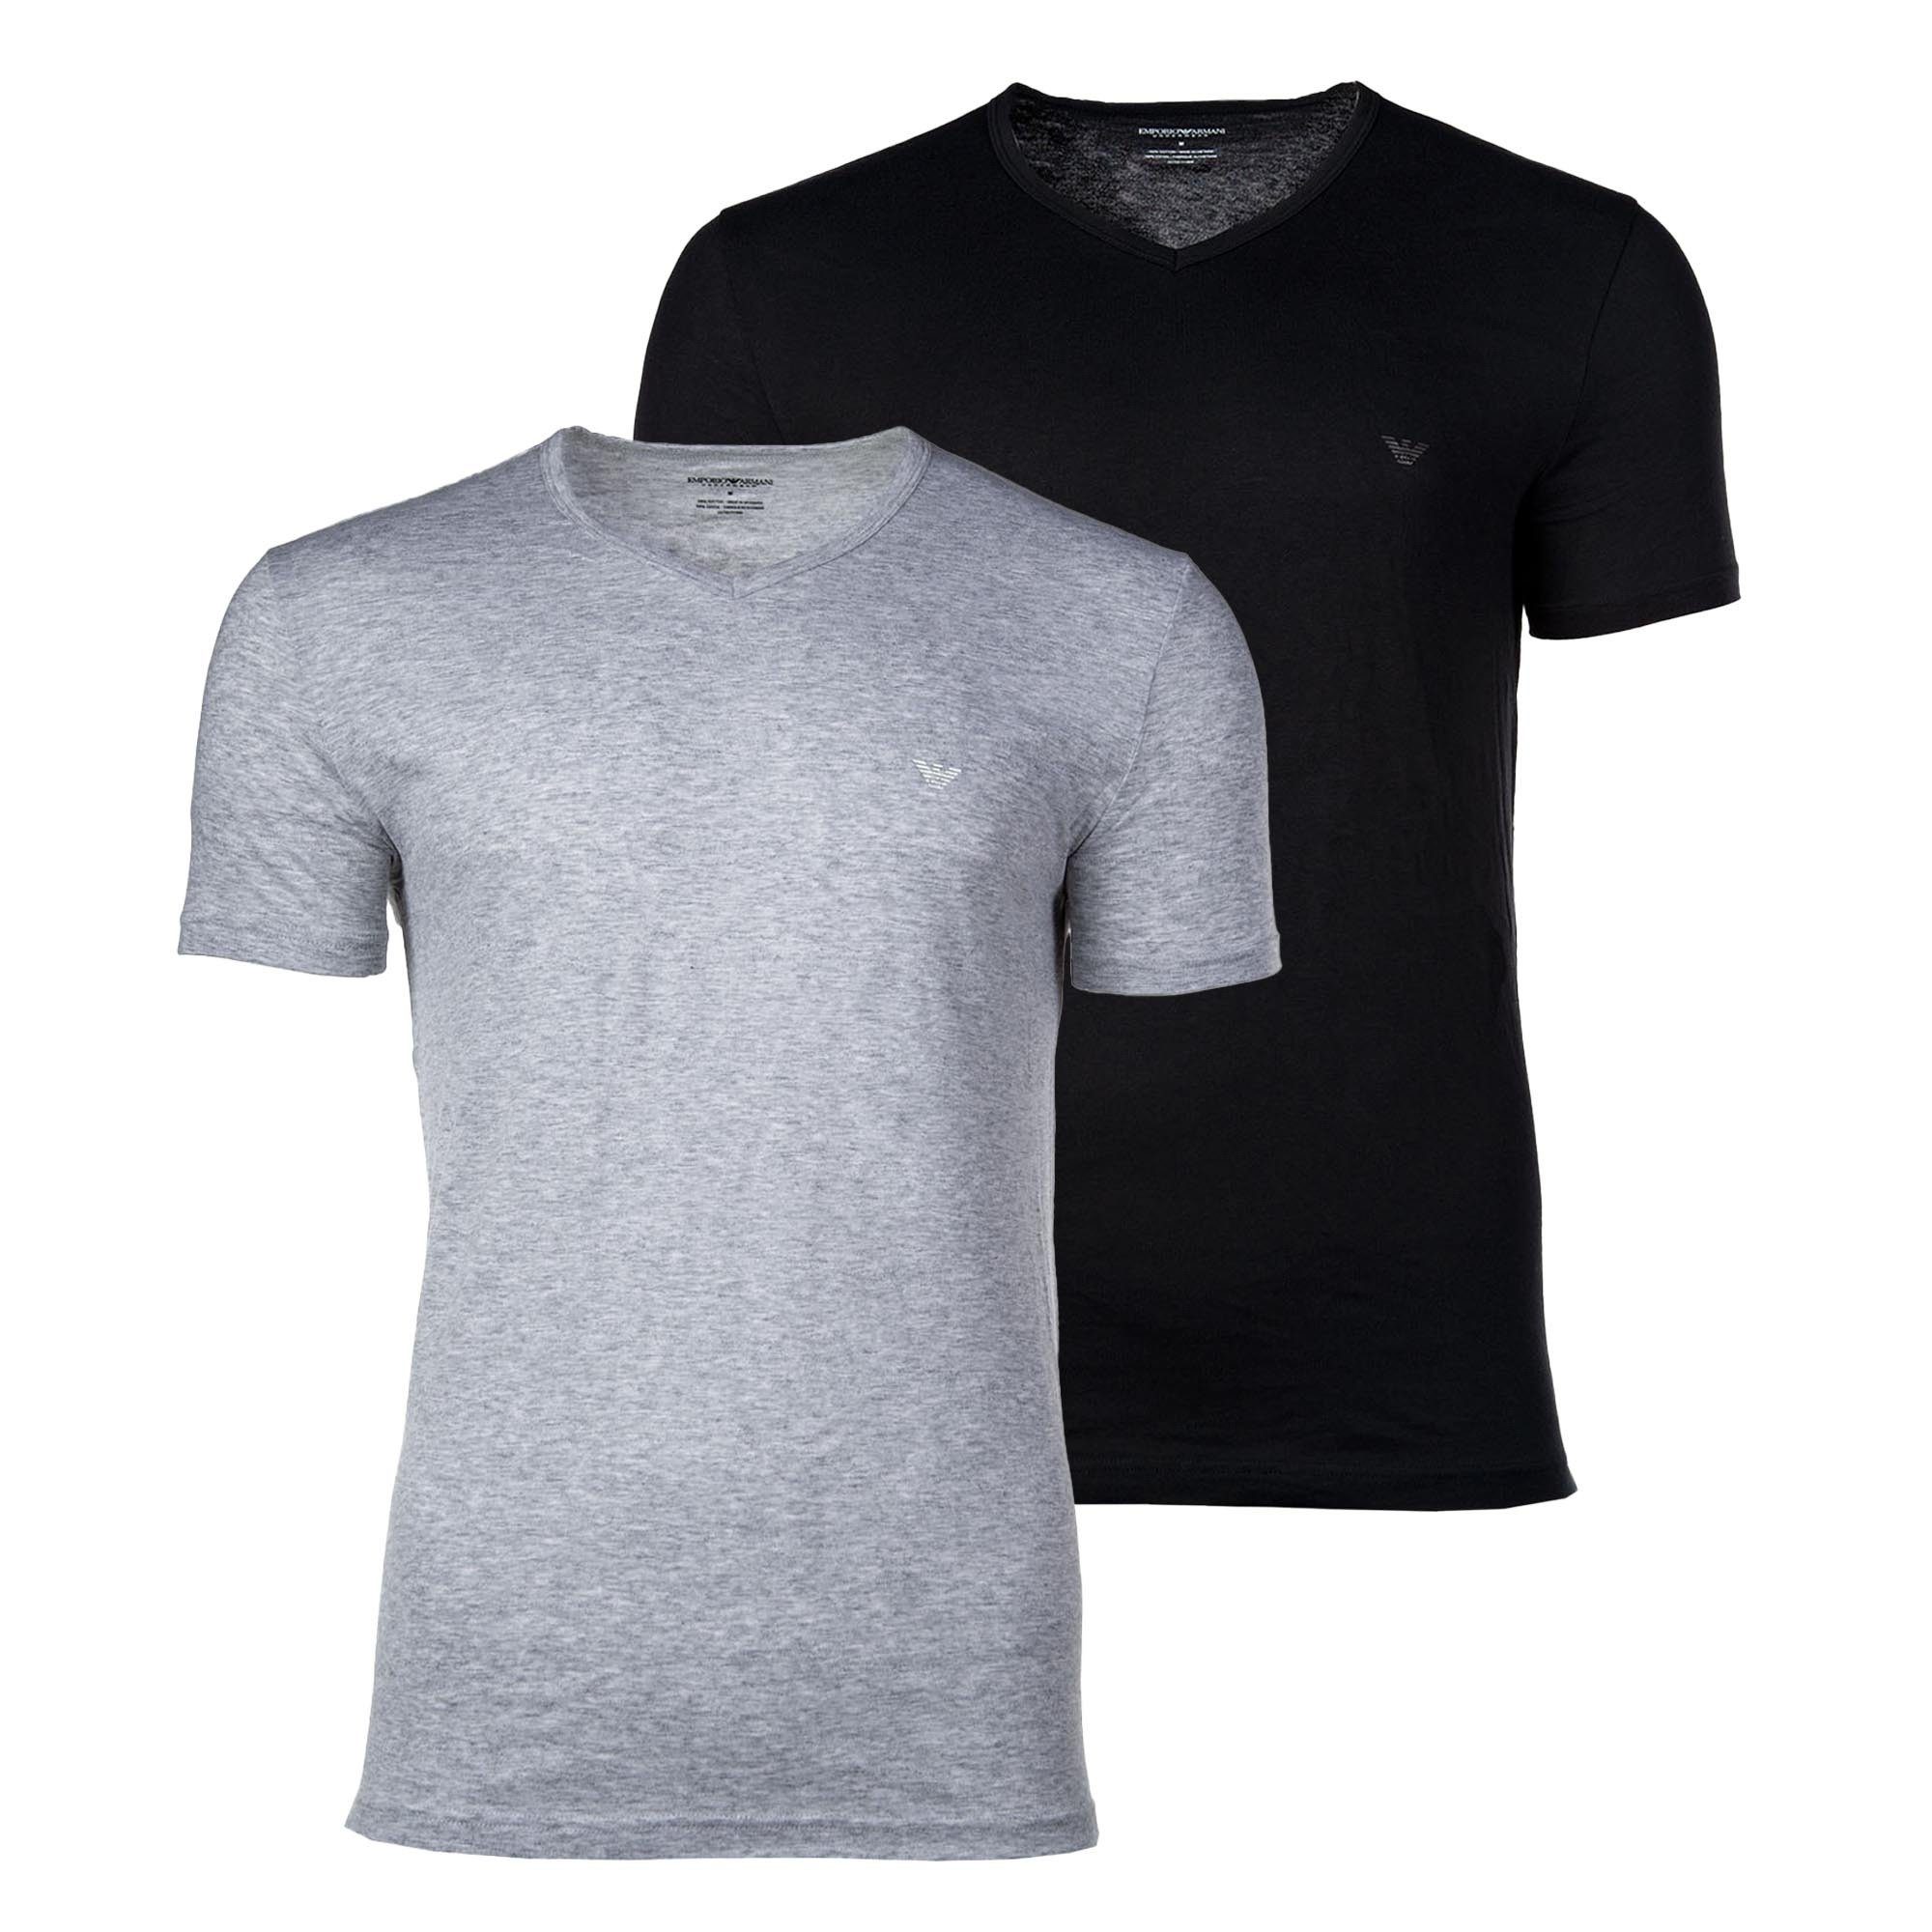 Emporio Armani T-Shirt Herren T-Shirt 2er Pack - V-Neck, V-Ausschnitt Schwarz/Grau